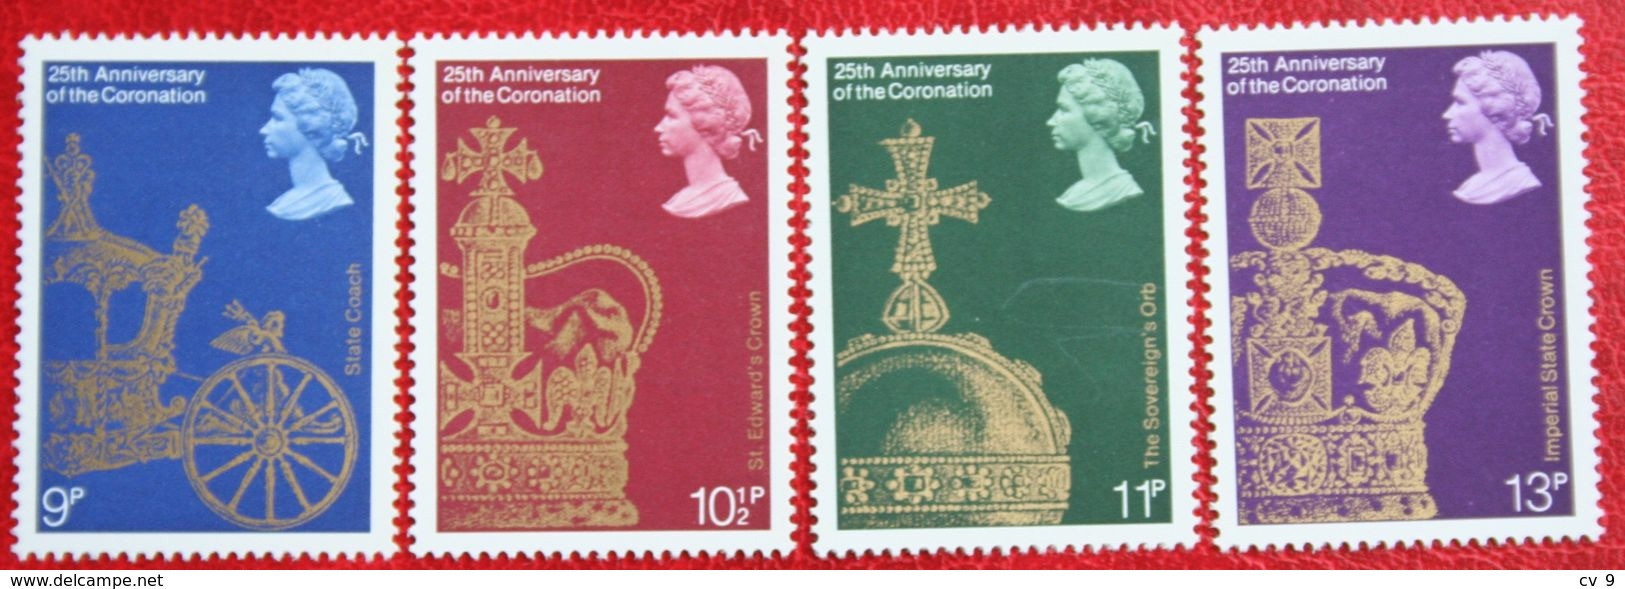 25th Anniv. Of Coronation Of Elizabeth II (Mi 765-768) 1978 POSTFRIS MNH ** ENGLAND GRANDE-BRETAGNE GB GREAT BRITAIN - Ungebraucht